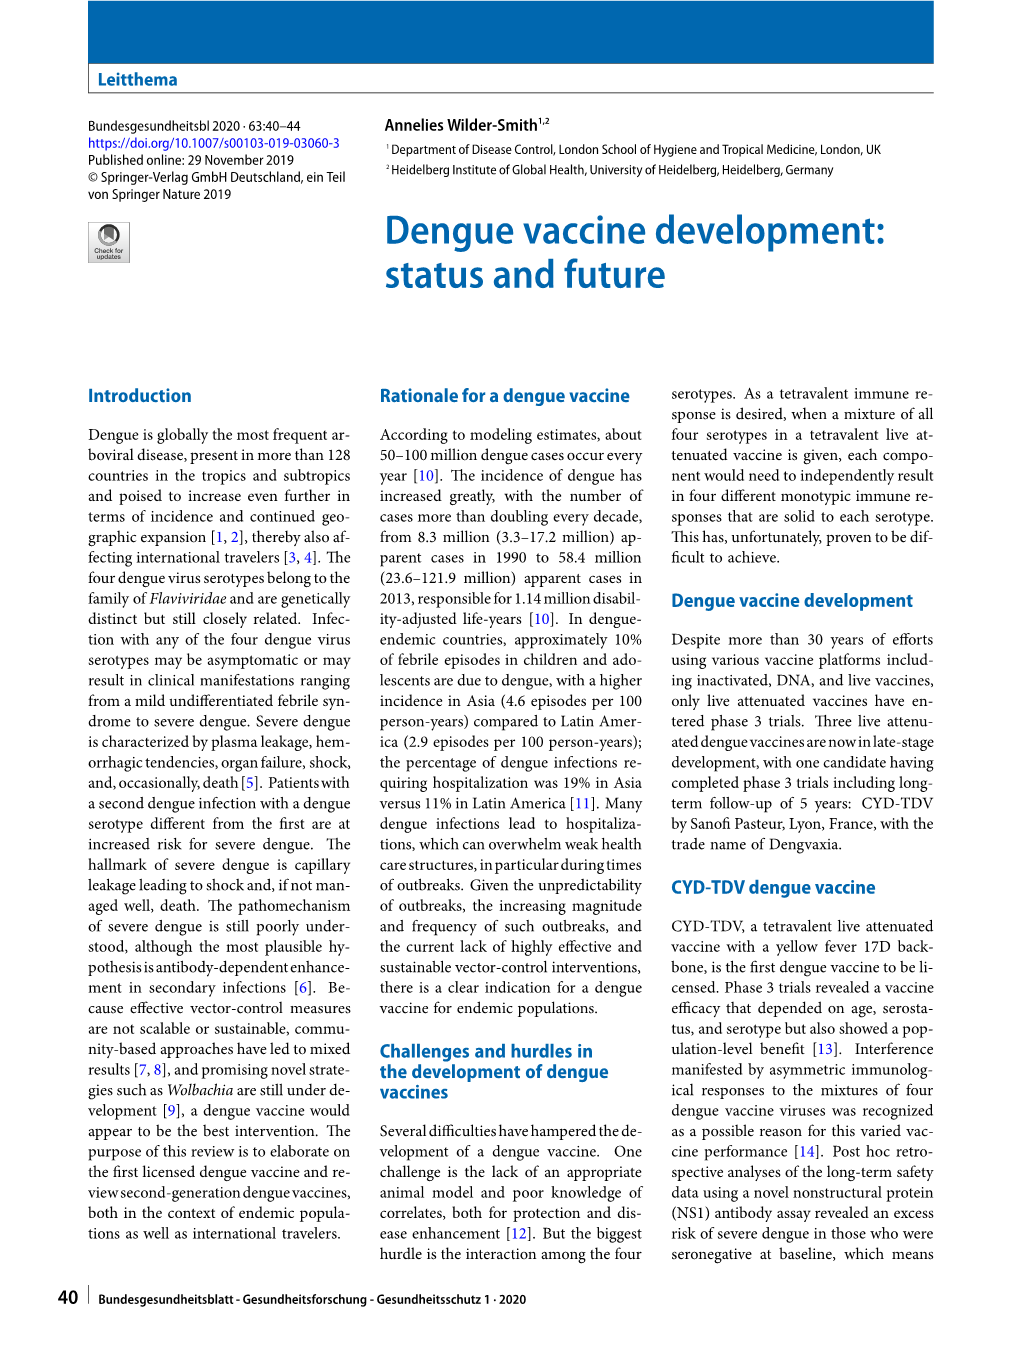 Dengue Vaccine Development: Status and Future